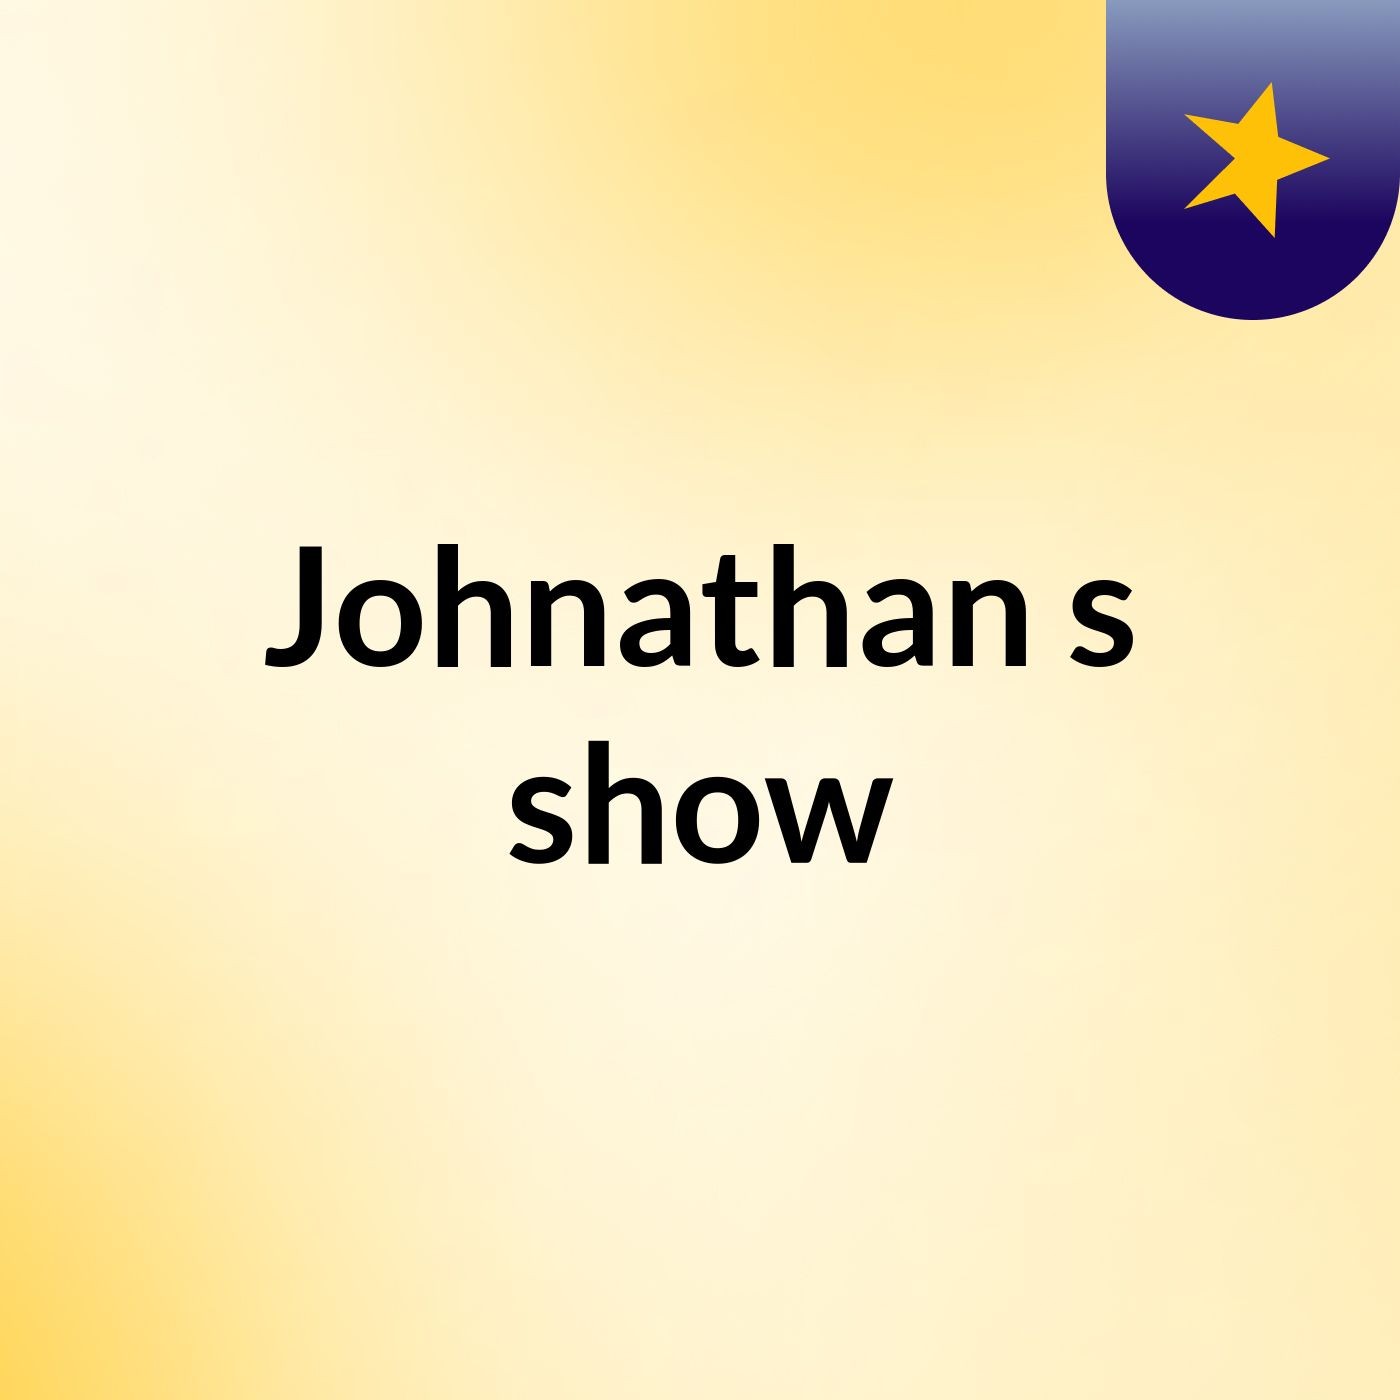 Episode 2 - Johnathan's show